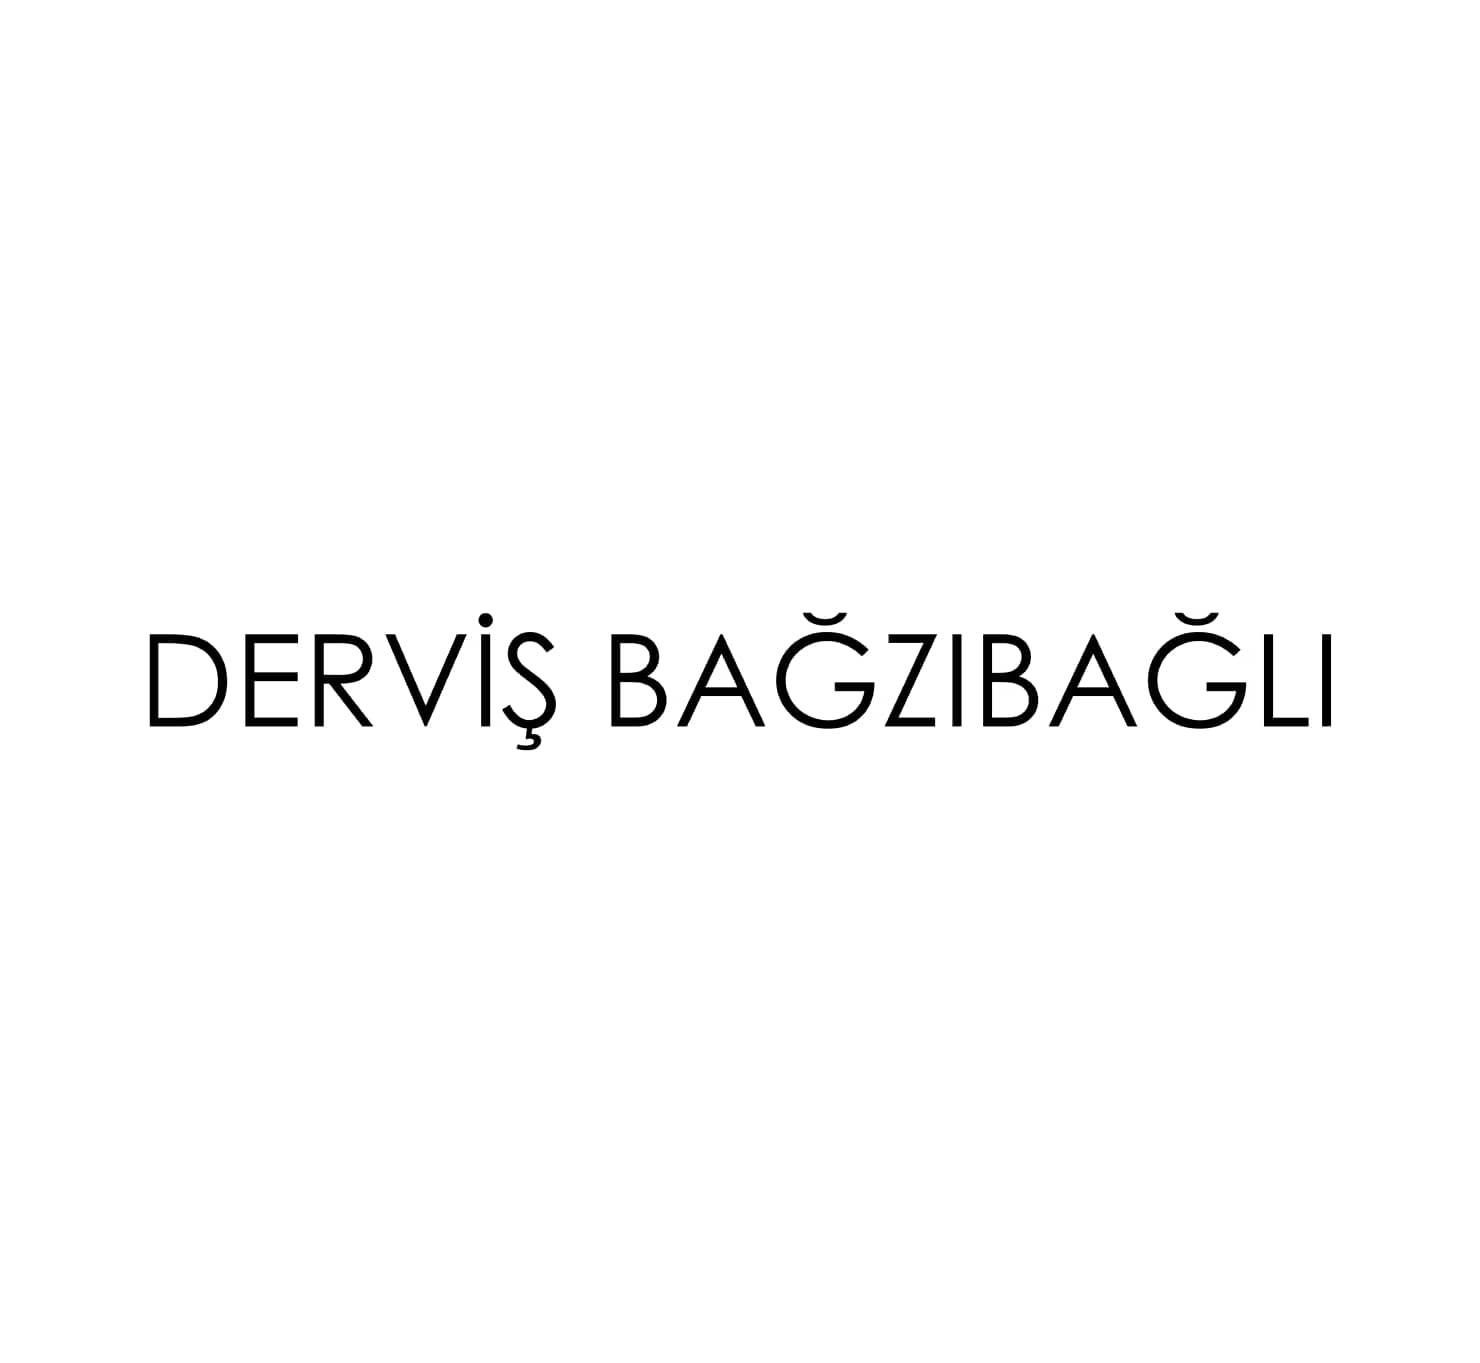 http://www.dervisbagzibagli.com.tr/